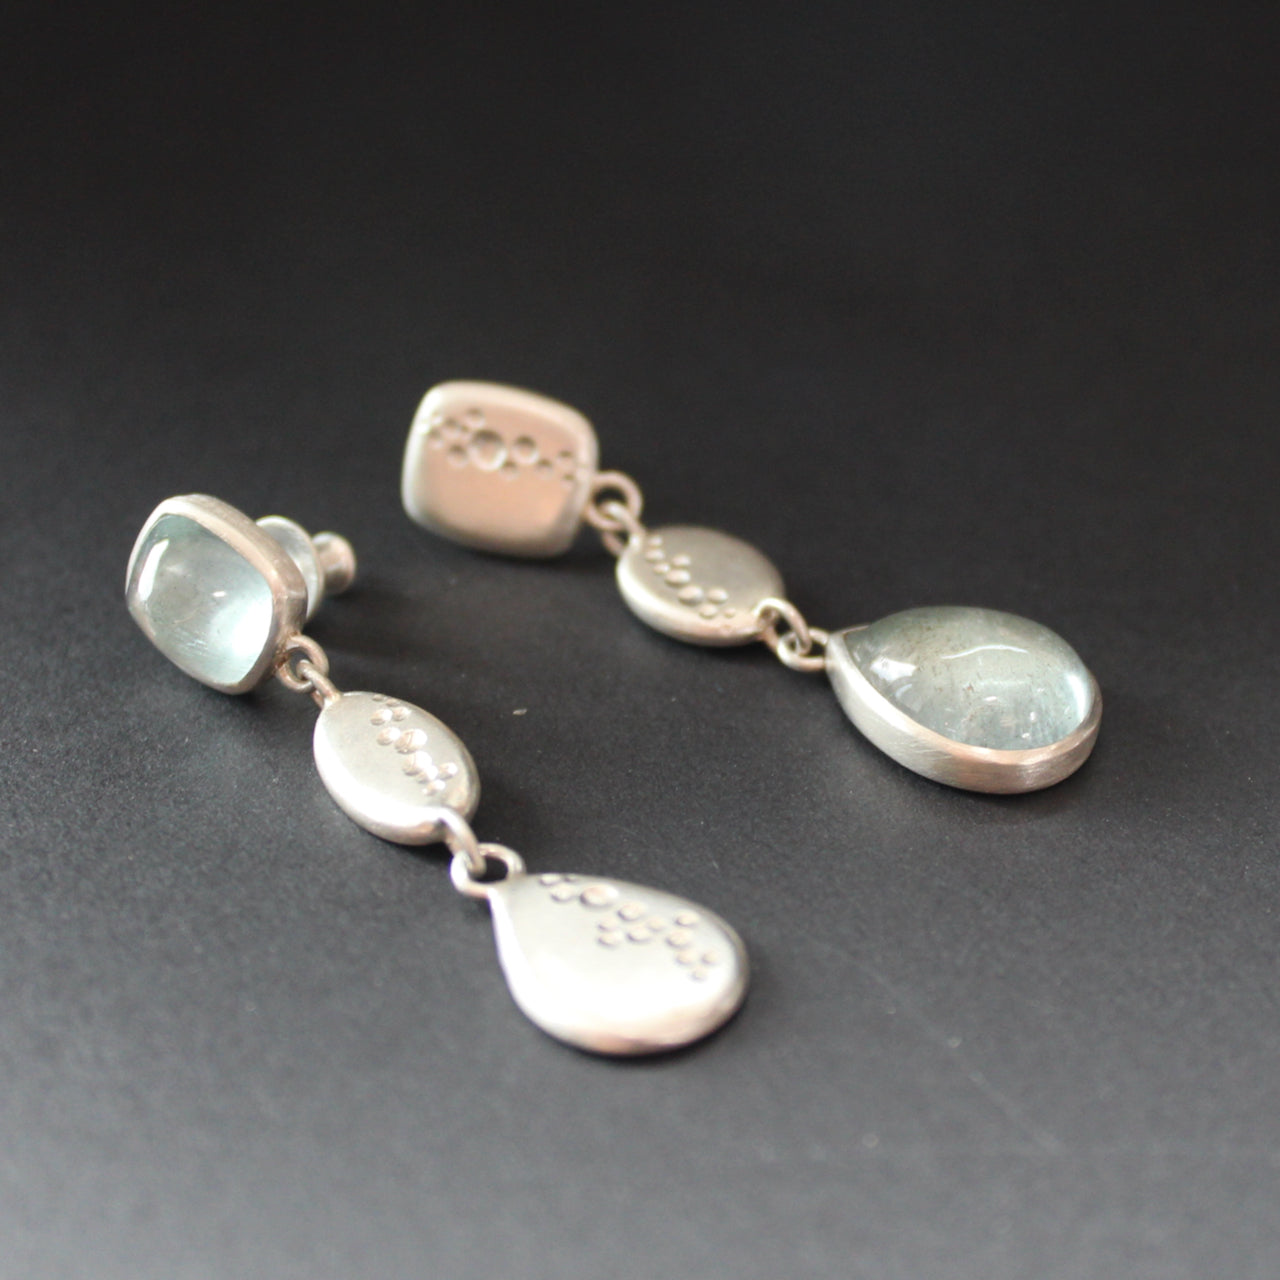 Carin Lindberg earrings of pale blue stones in silver drop setting